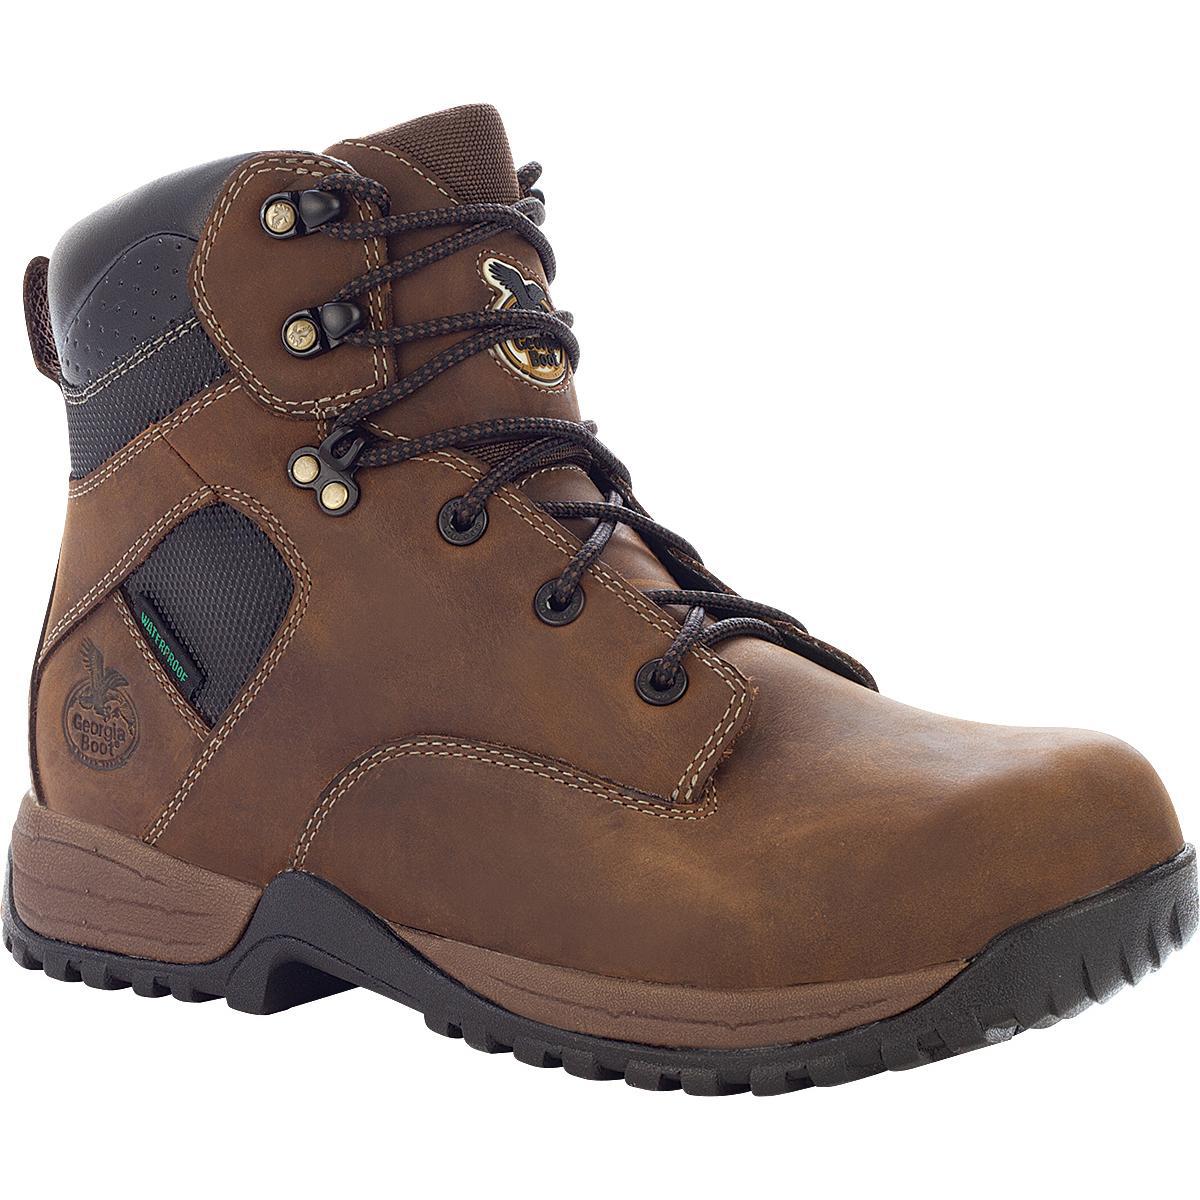 Georgia Boot: Men's Steel Toe Waterproof Leather Work Hiker - Style #G7774